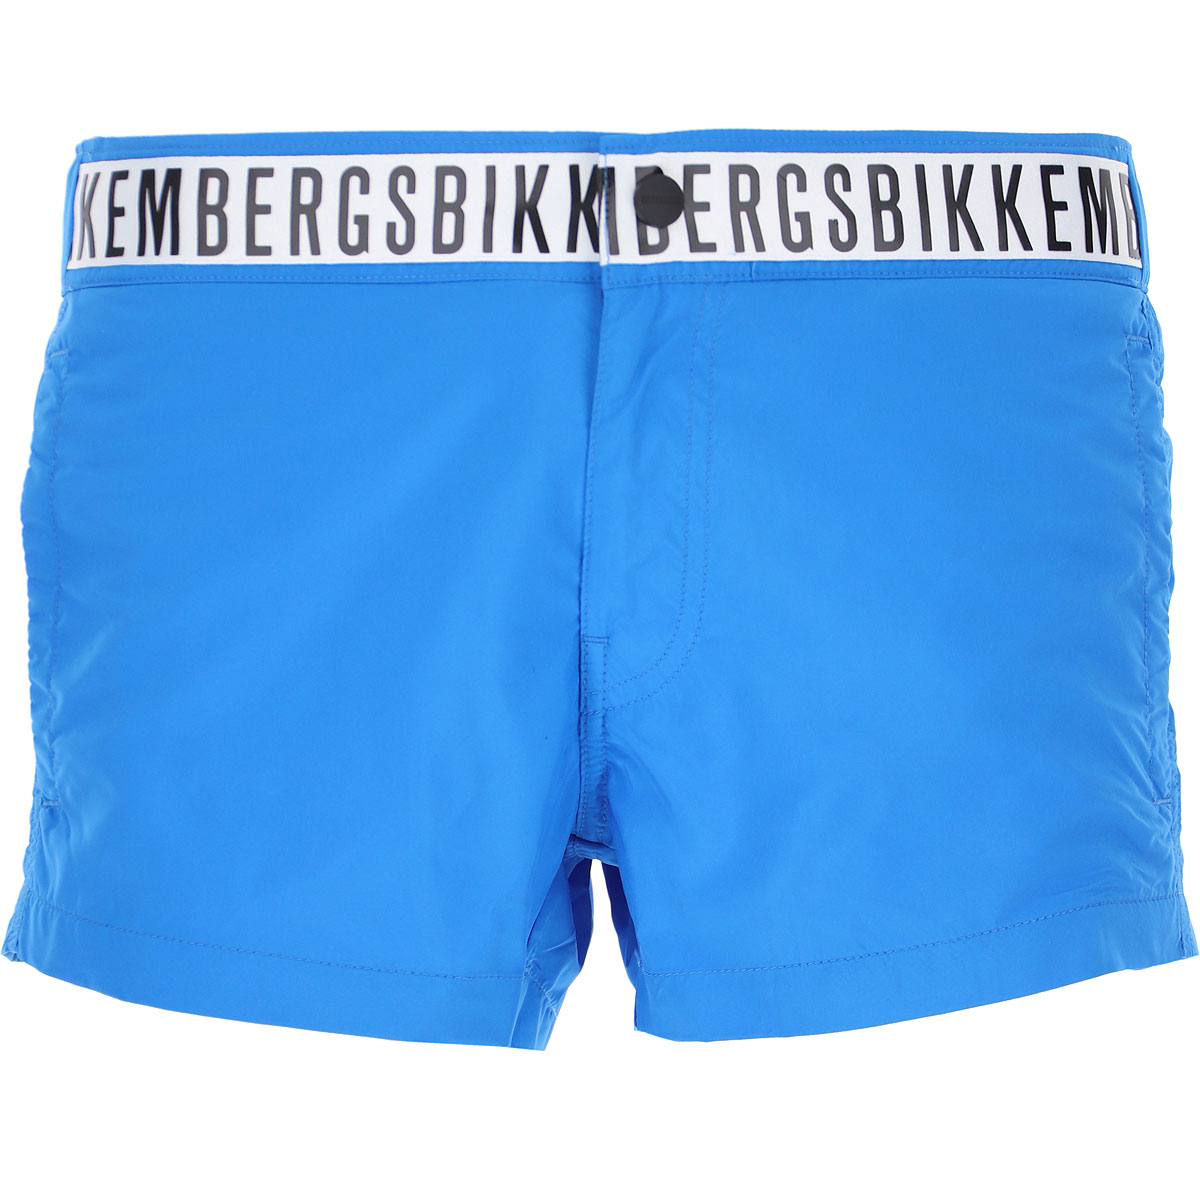 Mens Swimwear Bikkembergs, Style code: vbkb04927-2050-